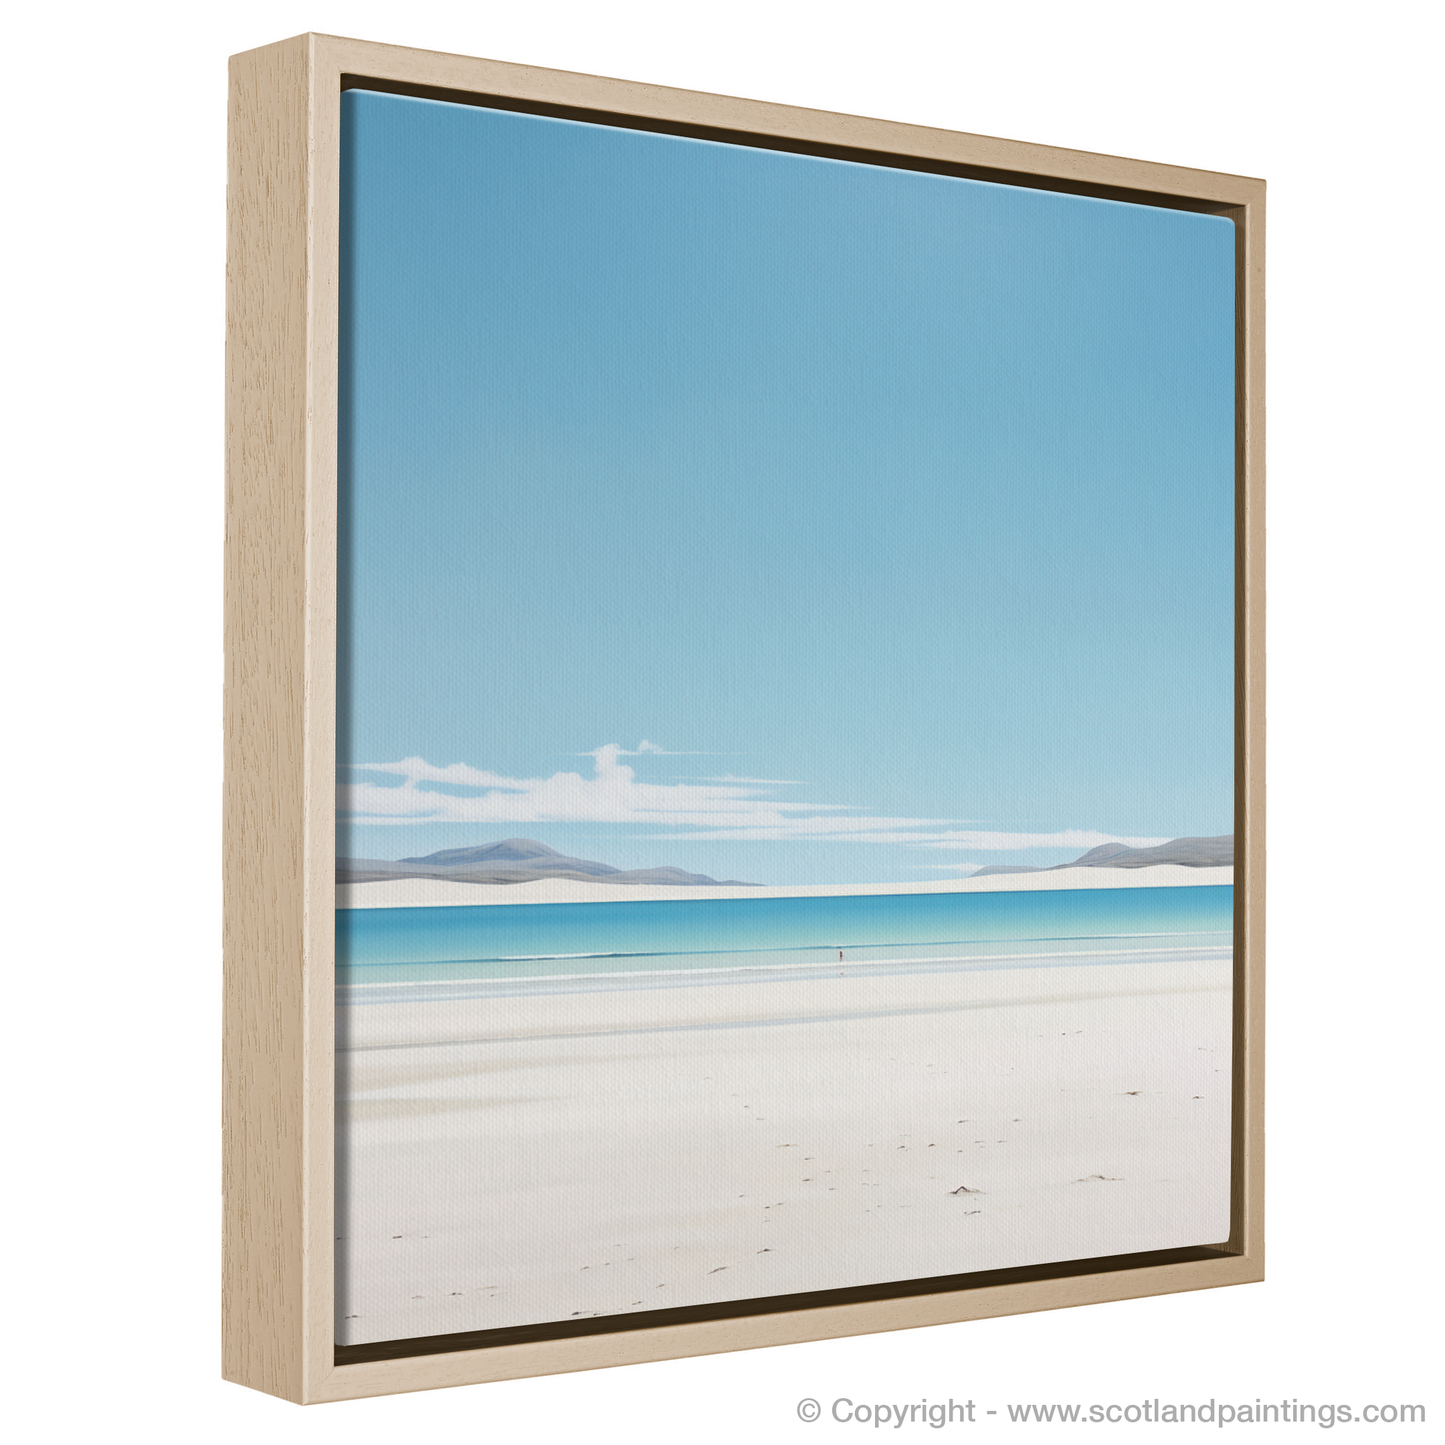 Painting and Art Print of Luskentyre Beach, Isle of Harris entitled "Tranquil Shores of Luskentyre Beach".